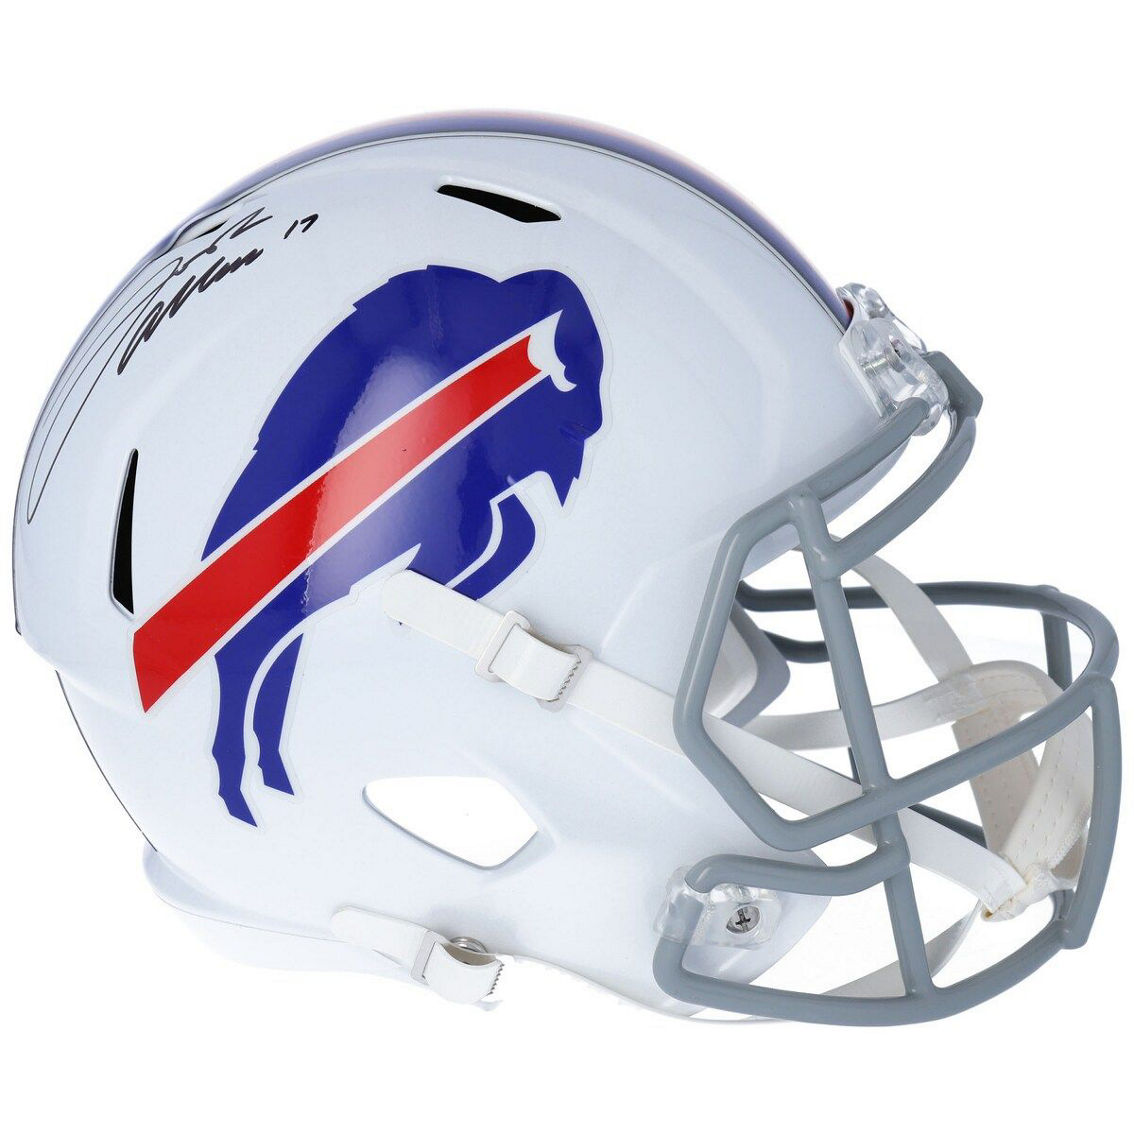 Fanatics Authentic Josh Allen Buffalo Bills Autographed Riddell Speed Replica Helmet - Image 2 of 2